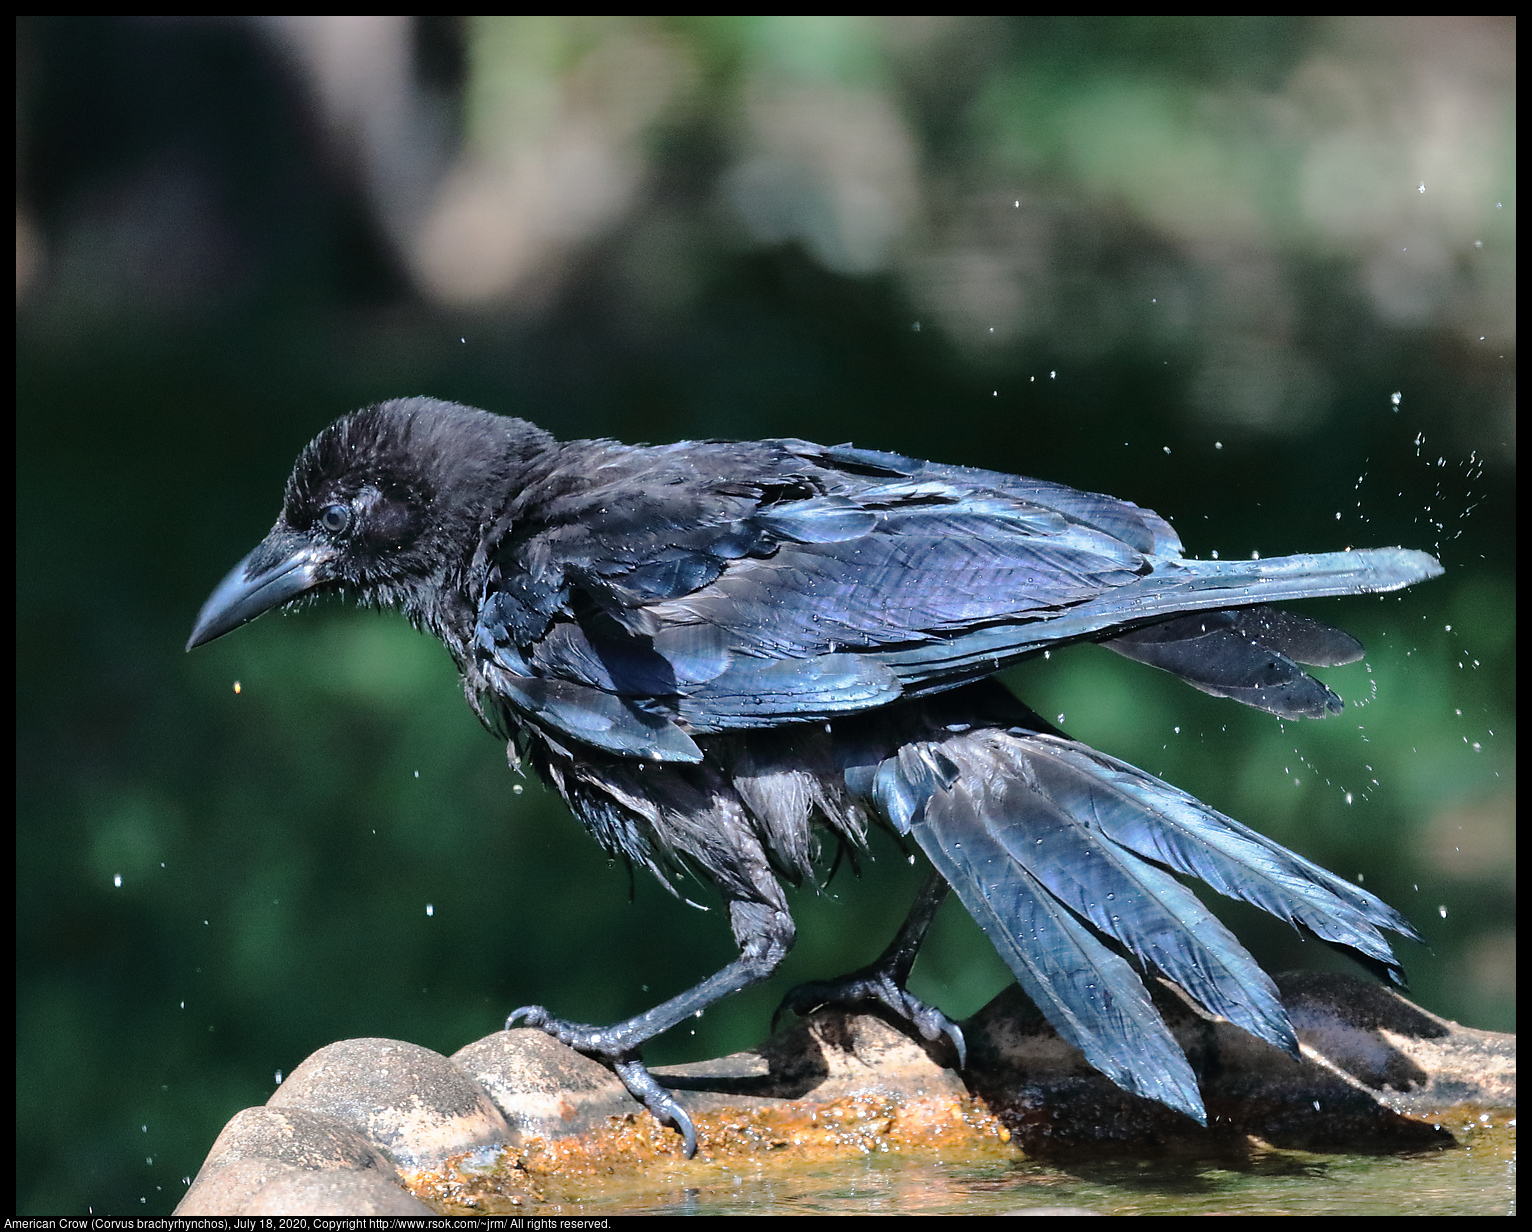 American Crow (Corvus brachyrhynchos), July 18, 2020